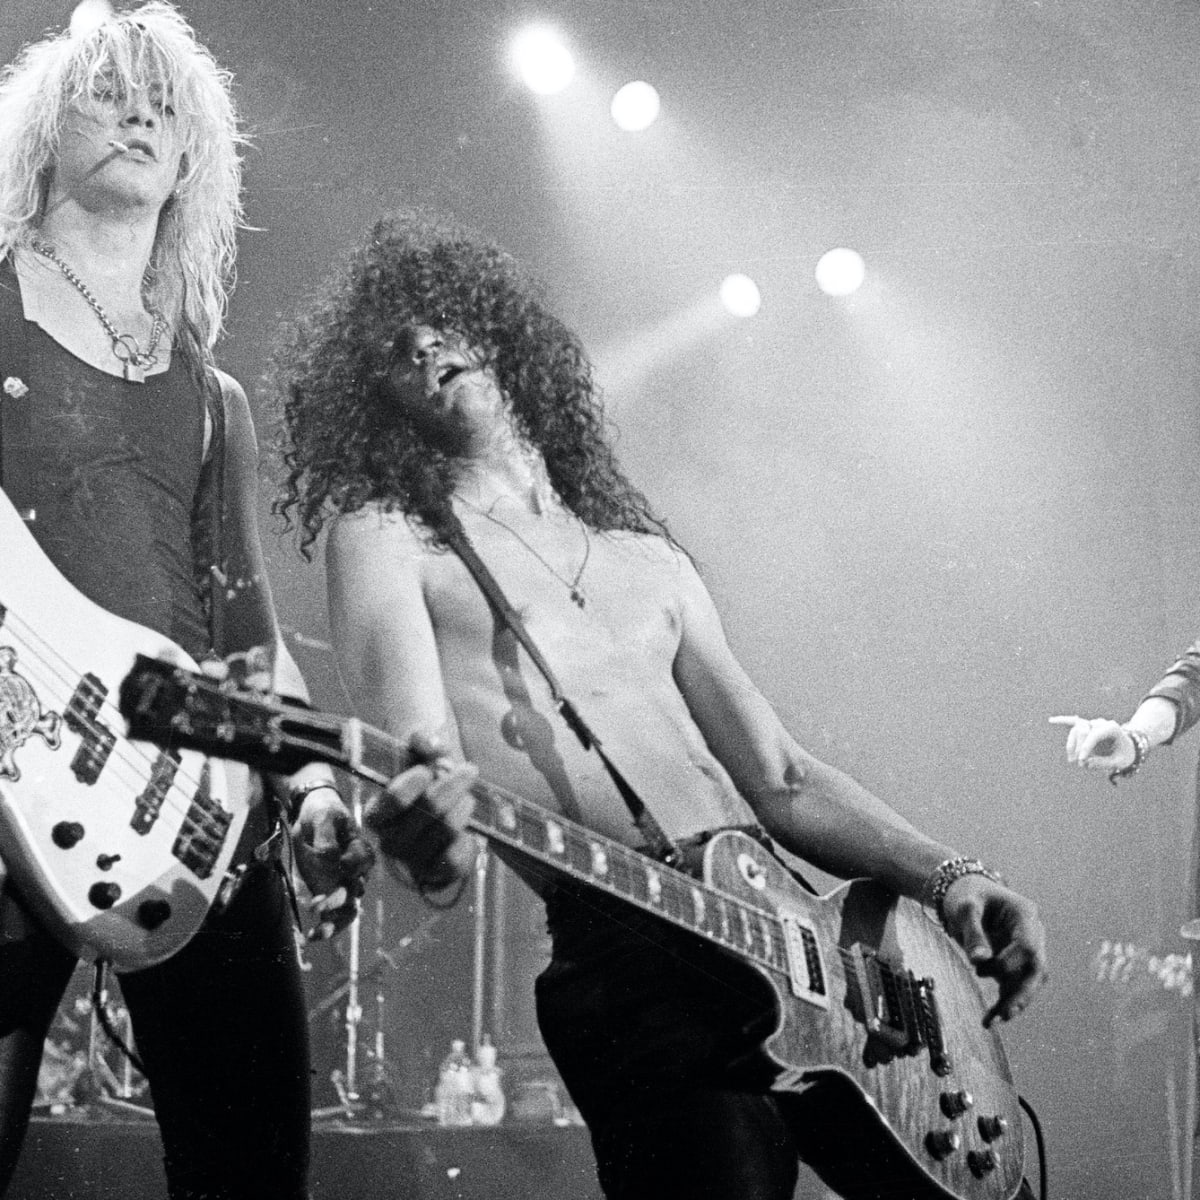 Guns N' Roses - Paradise City Live at The Ritz, New York 1991